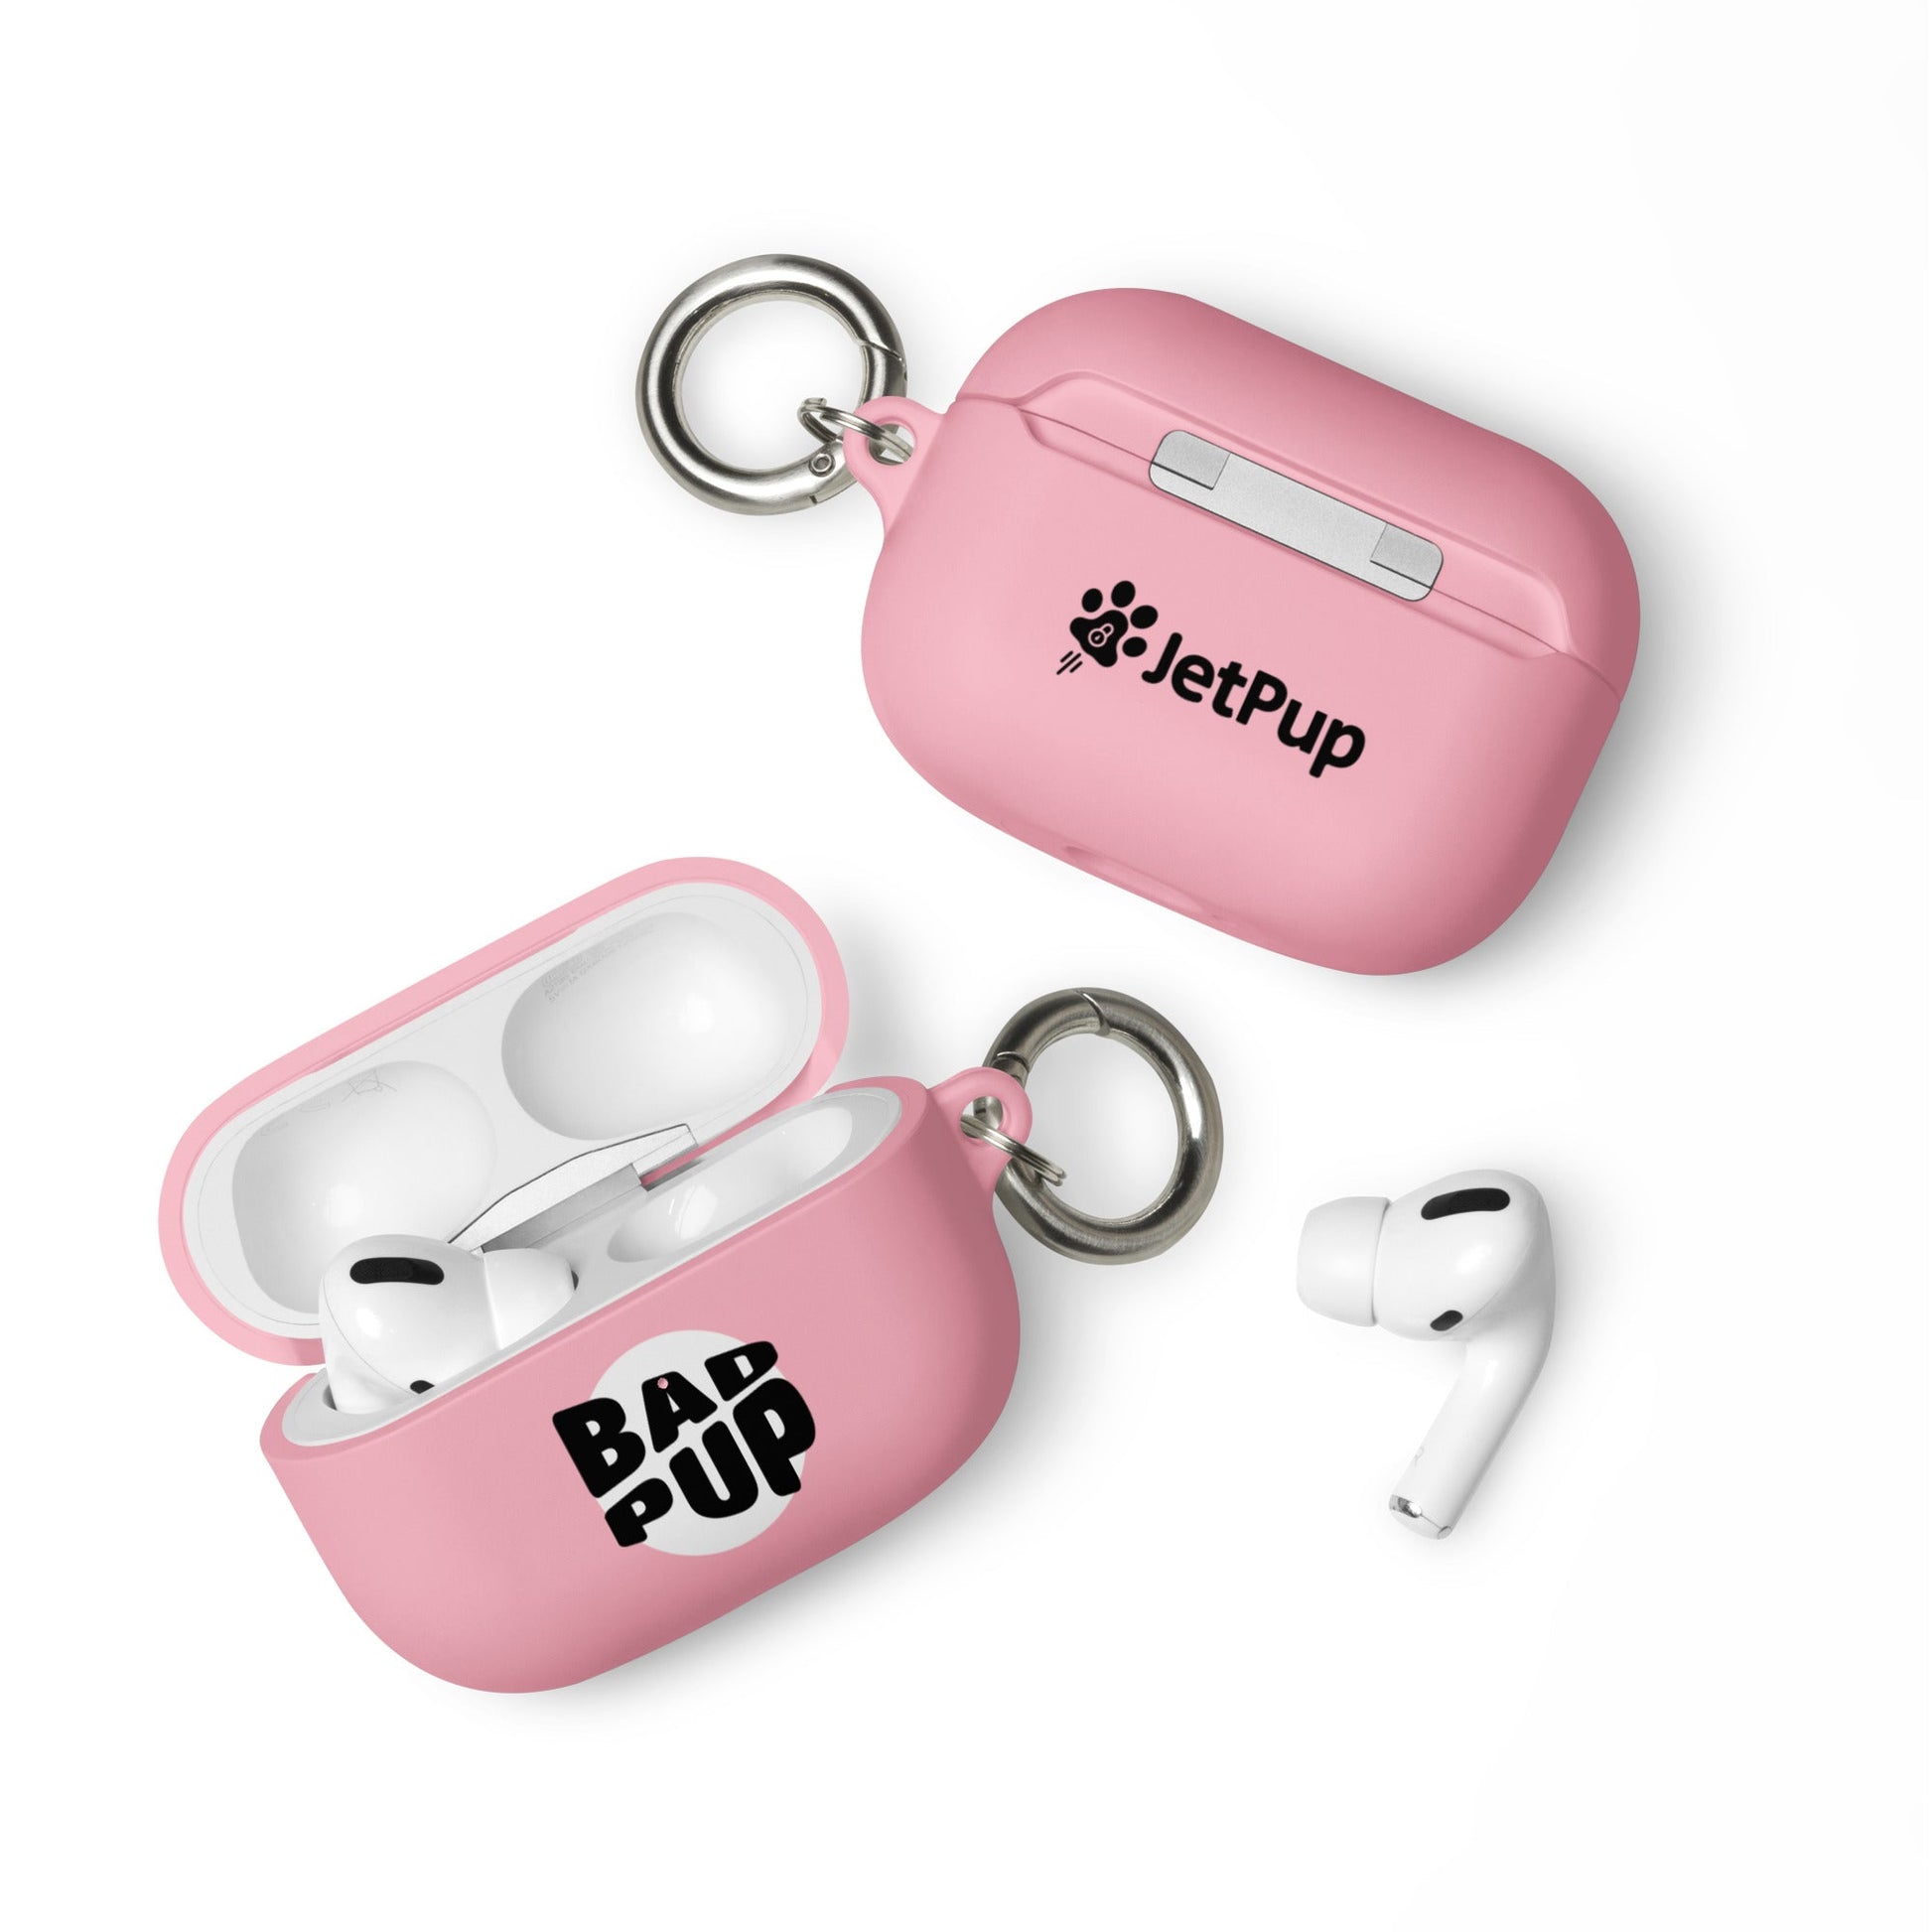 Bad Pup AirPods Case - Pink - JetPup